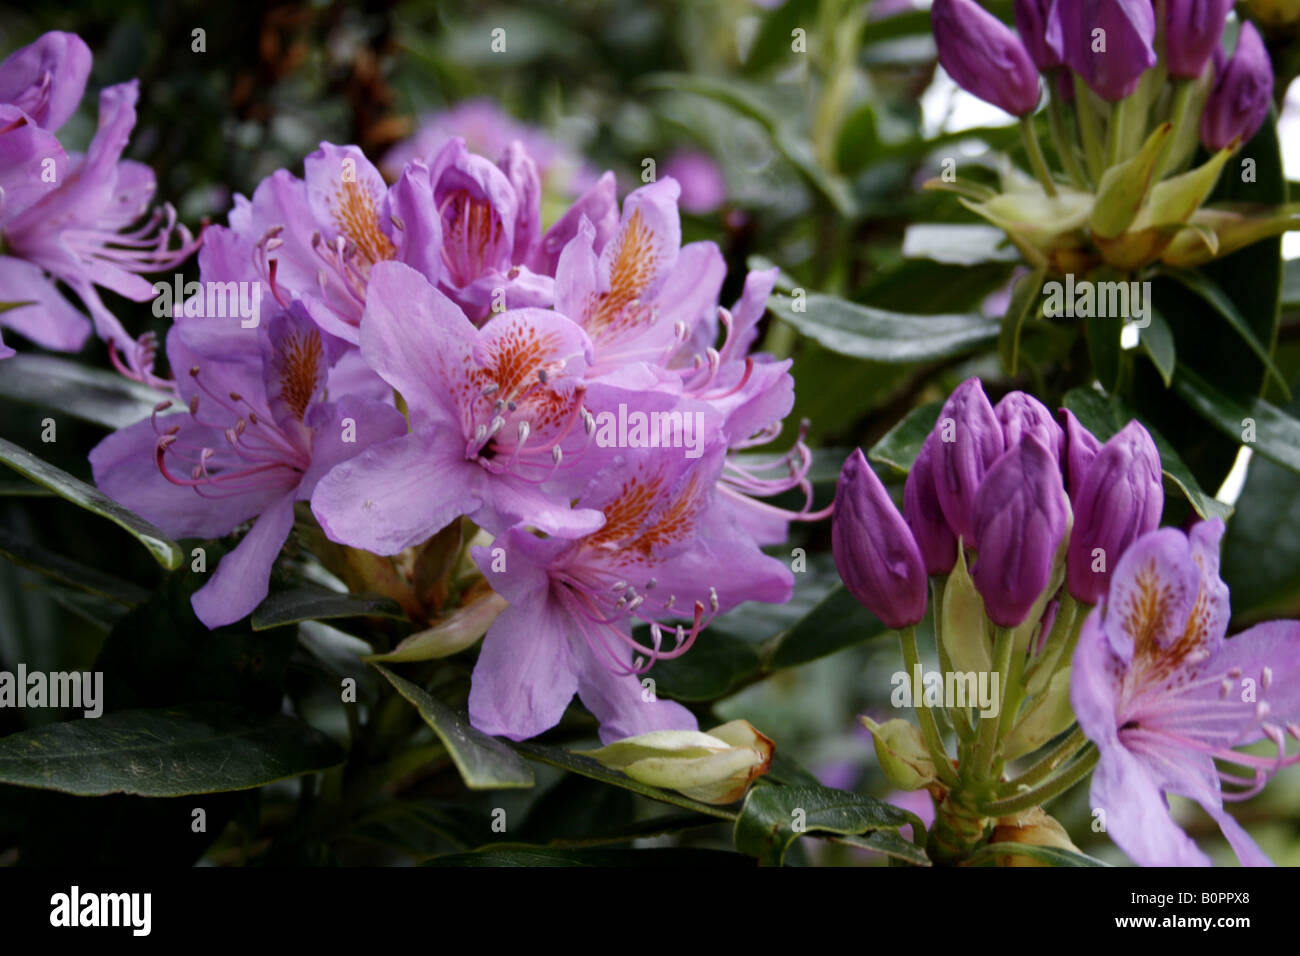 rhododendrons evergreen flowering shrubs.uk 2008 Stock Photo